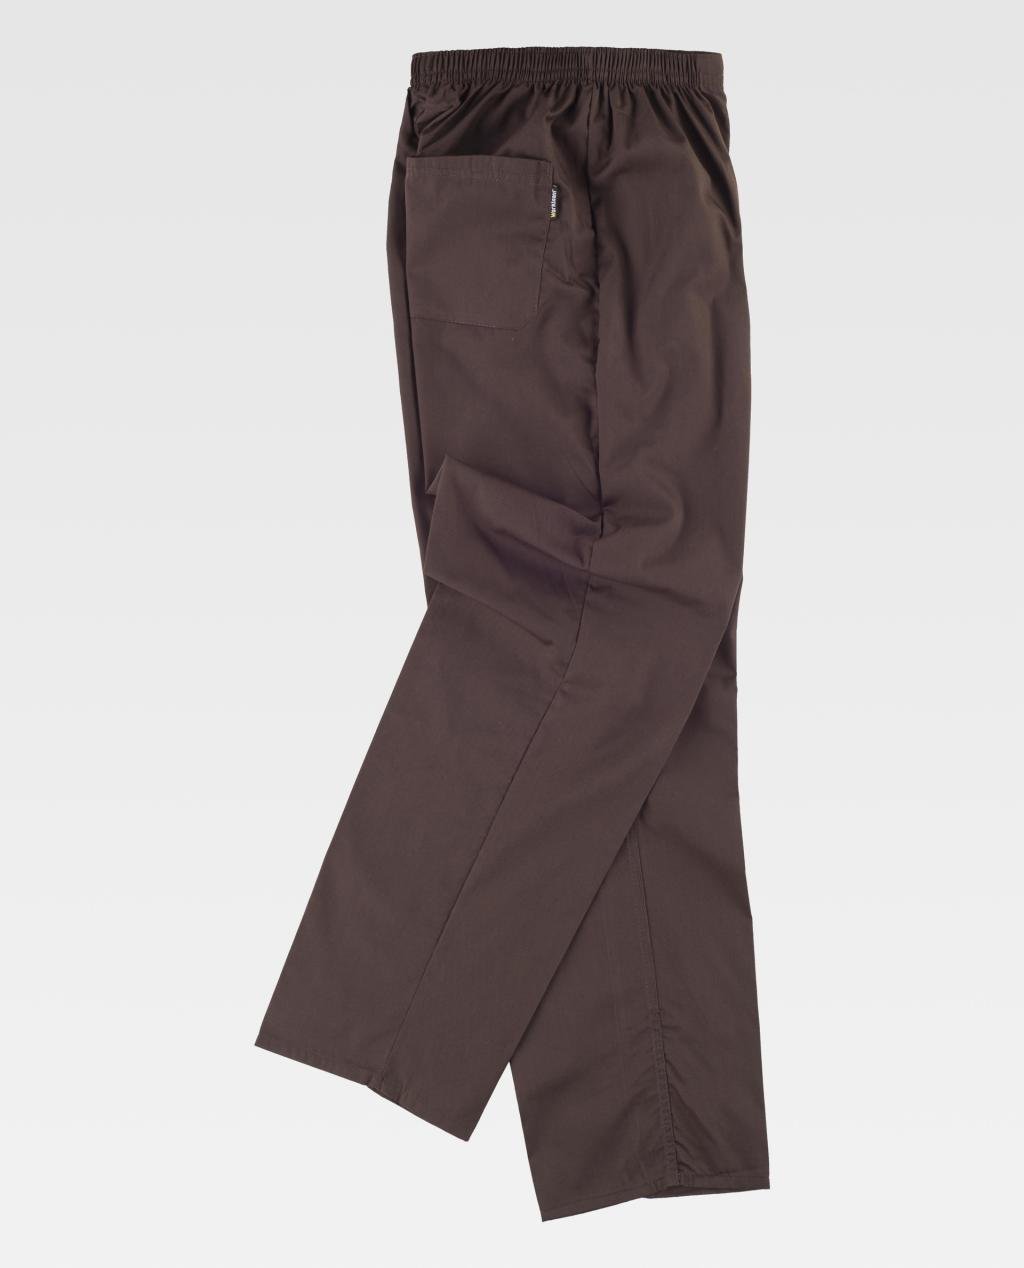 pantalone-unisex-brown.jpg